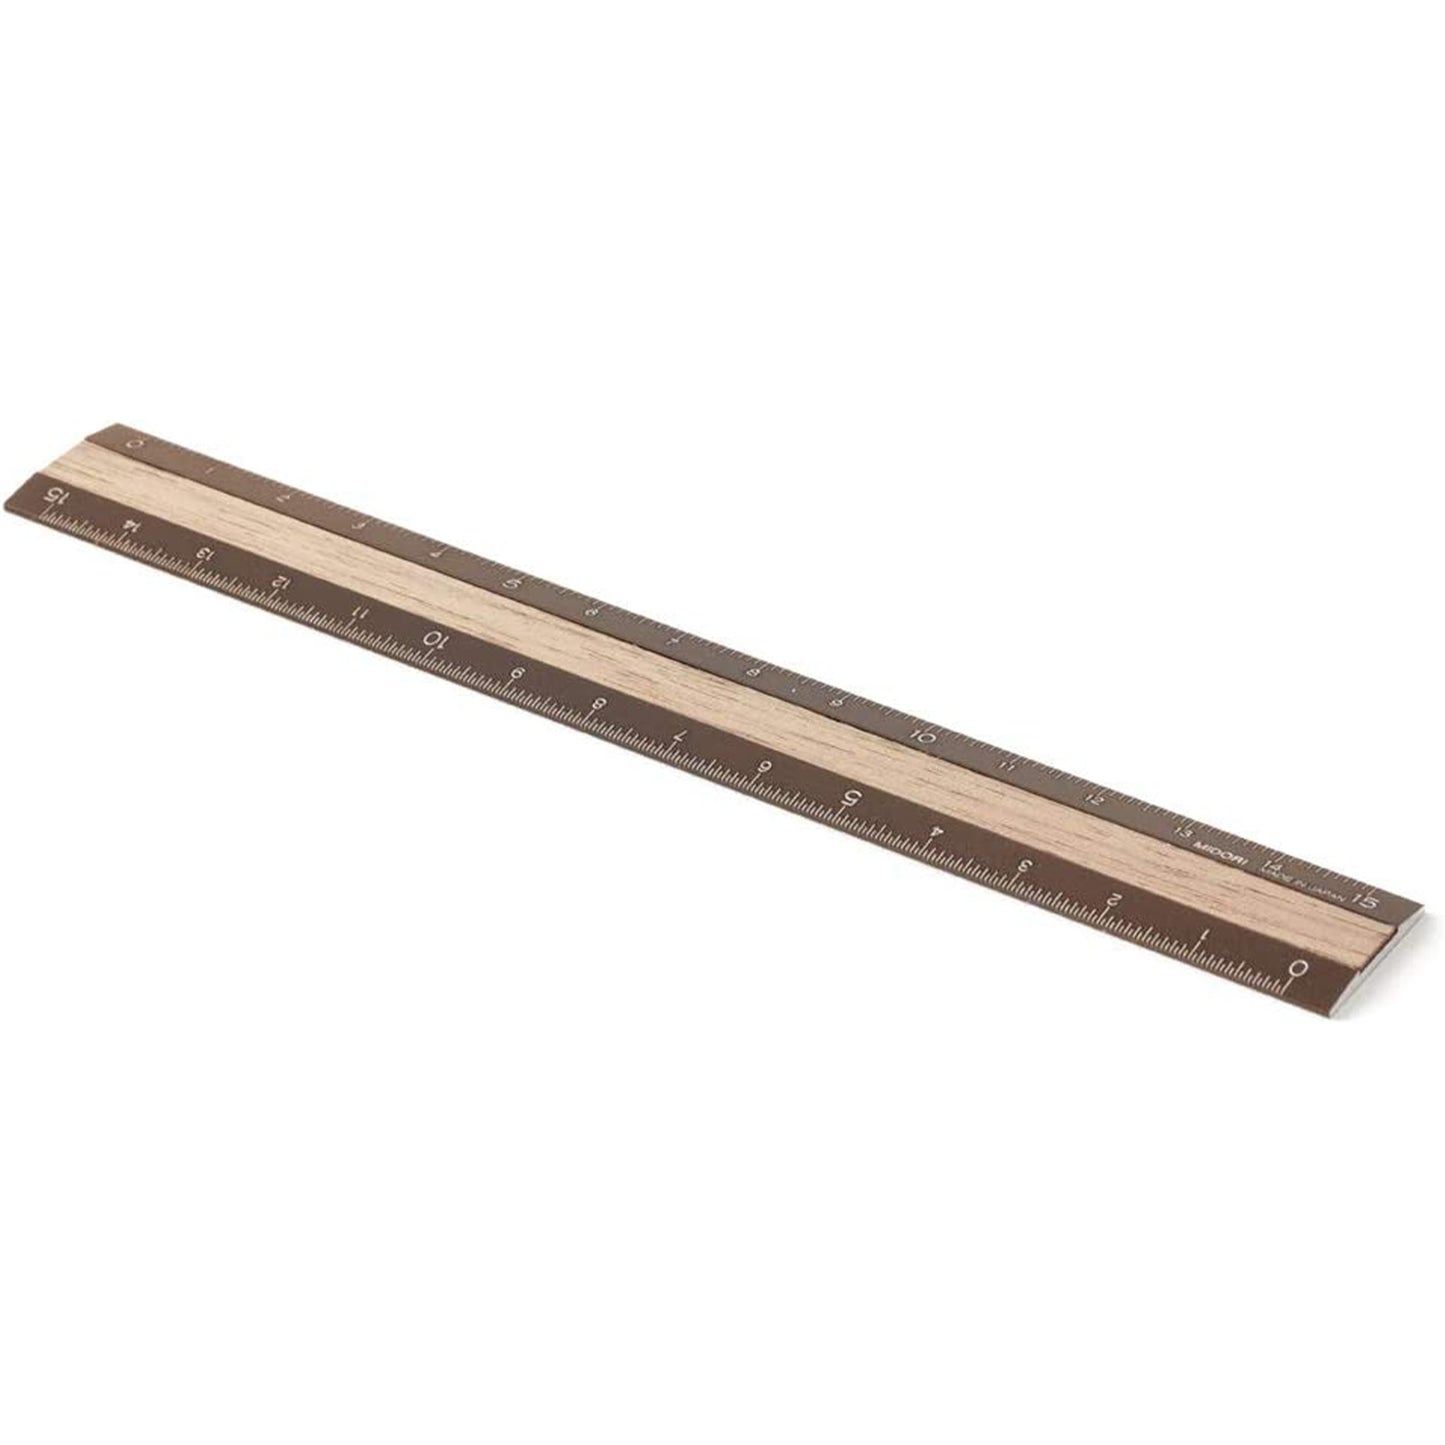 Aluminum & Wood Ruler 15cm Brown / Midori